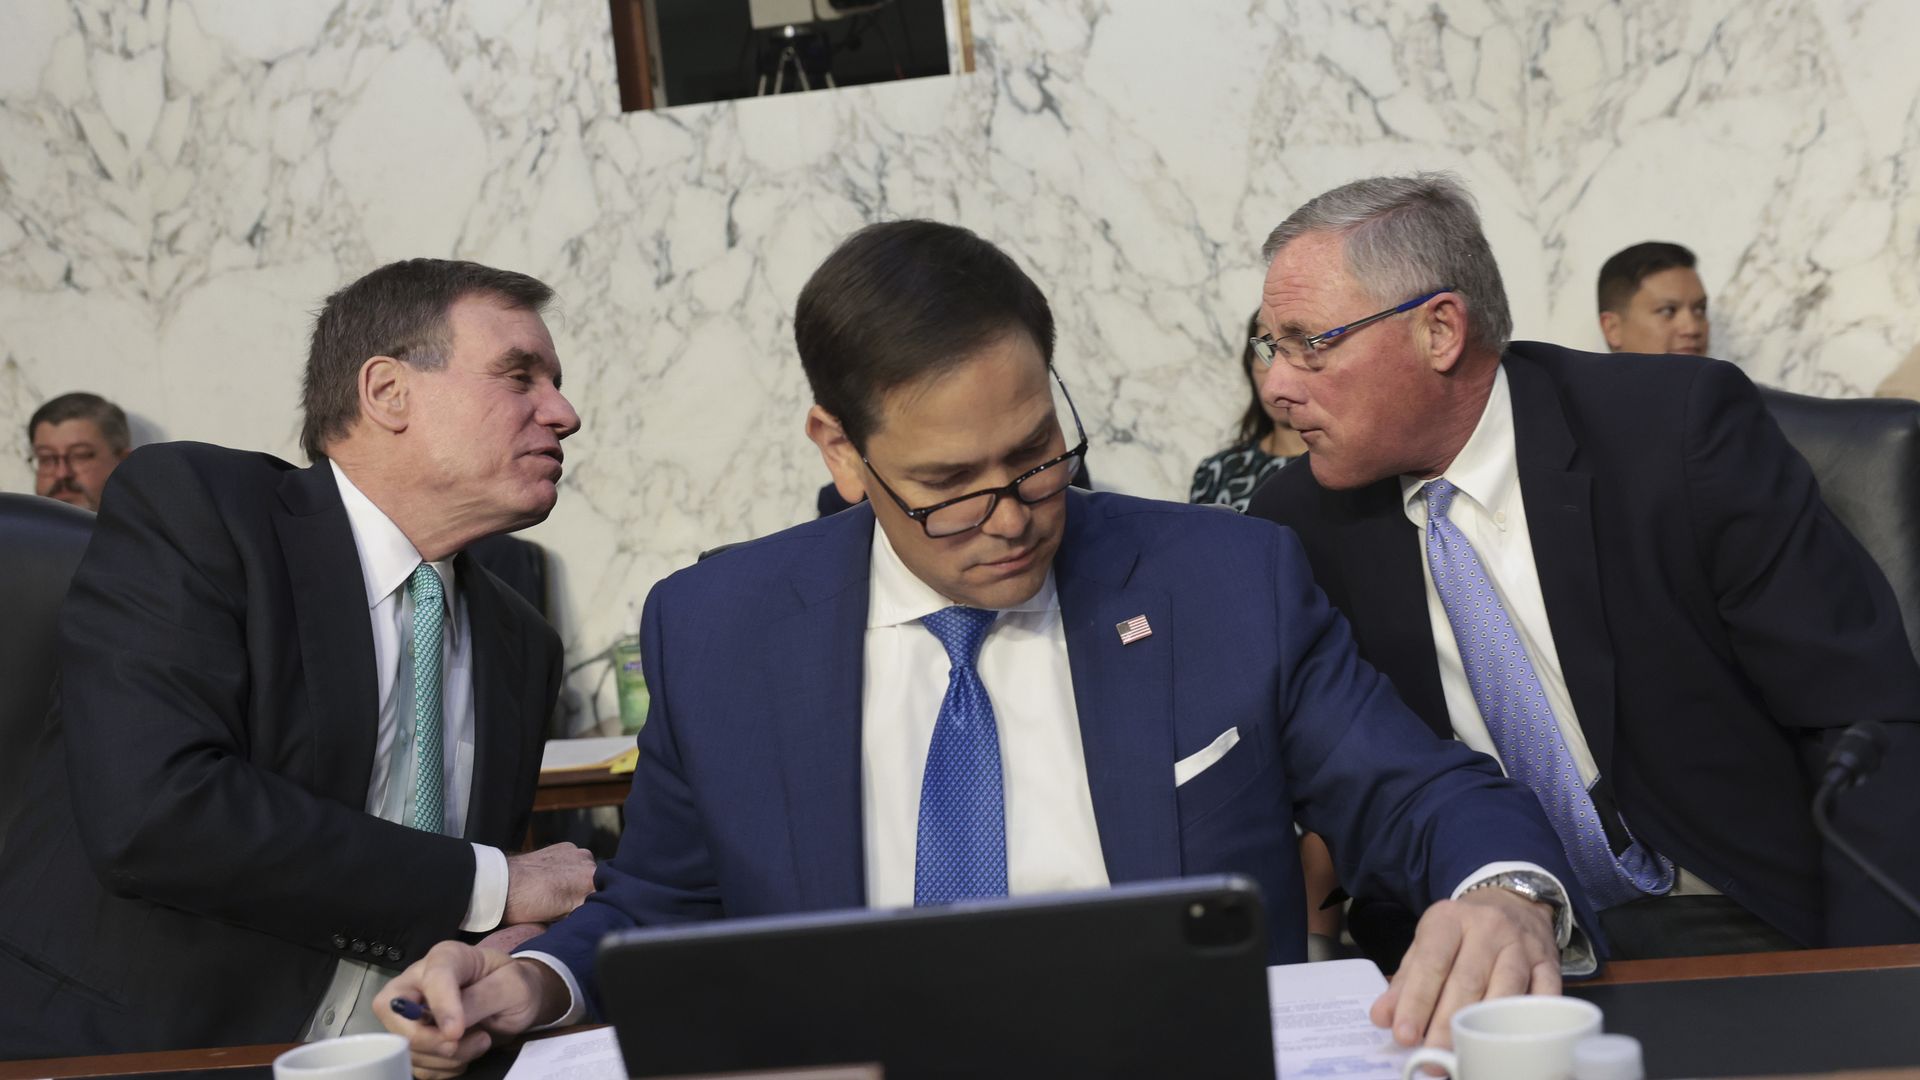 Senator Rubio sitting on the committee dais 